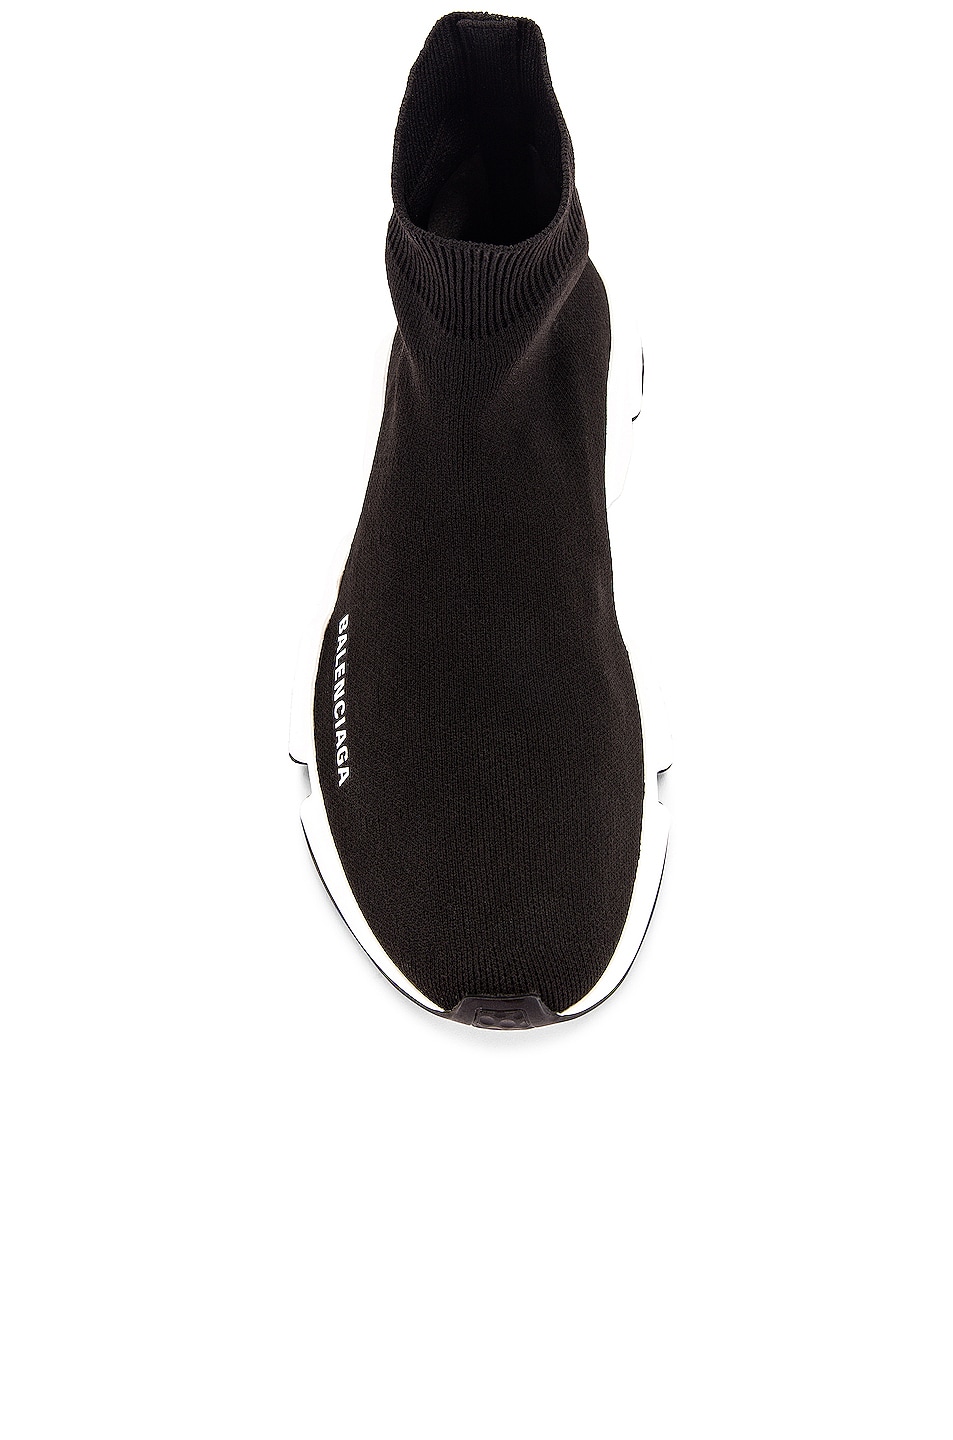 Balenciaga Bicolor Speed Sneakers in Black & White | FWRD